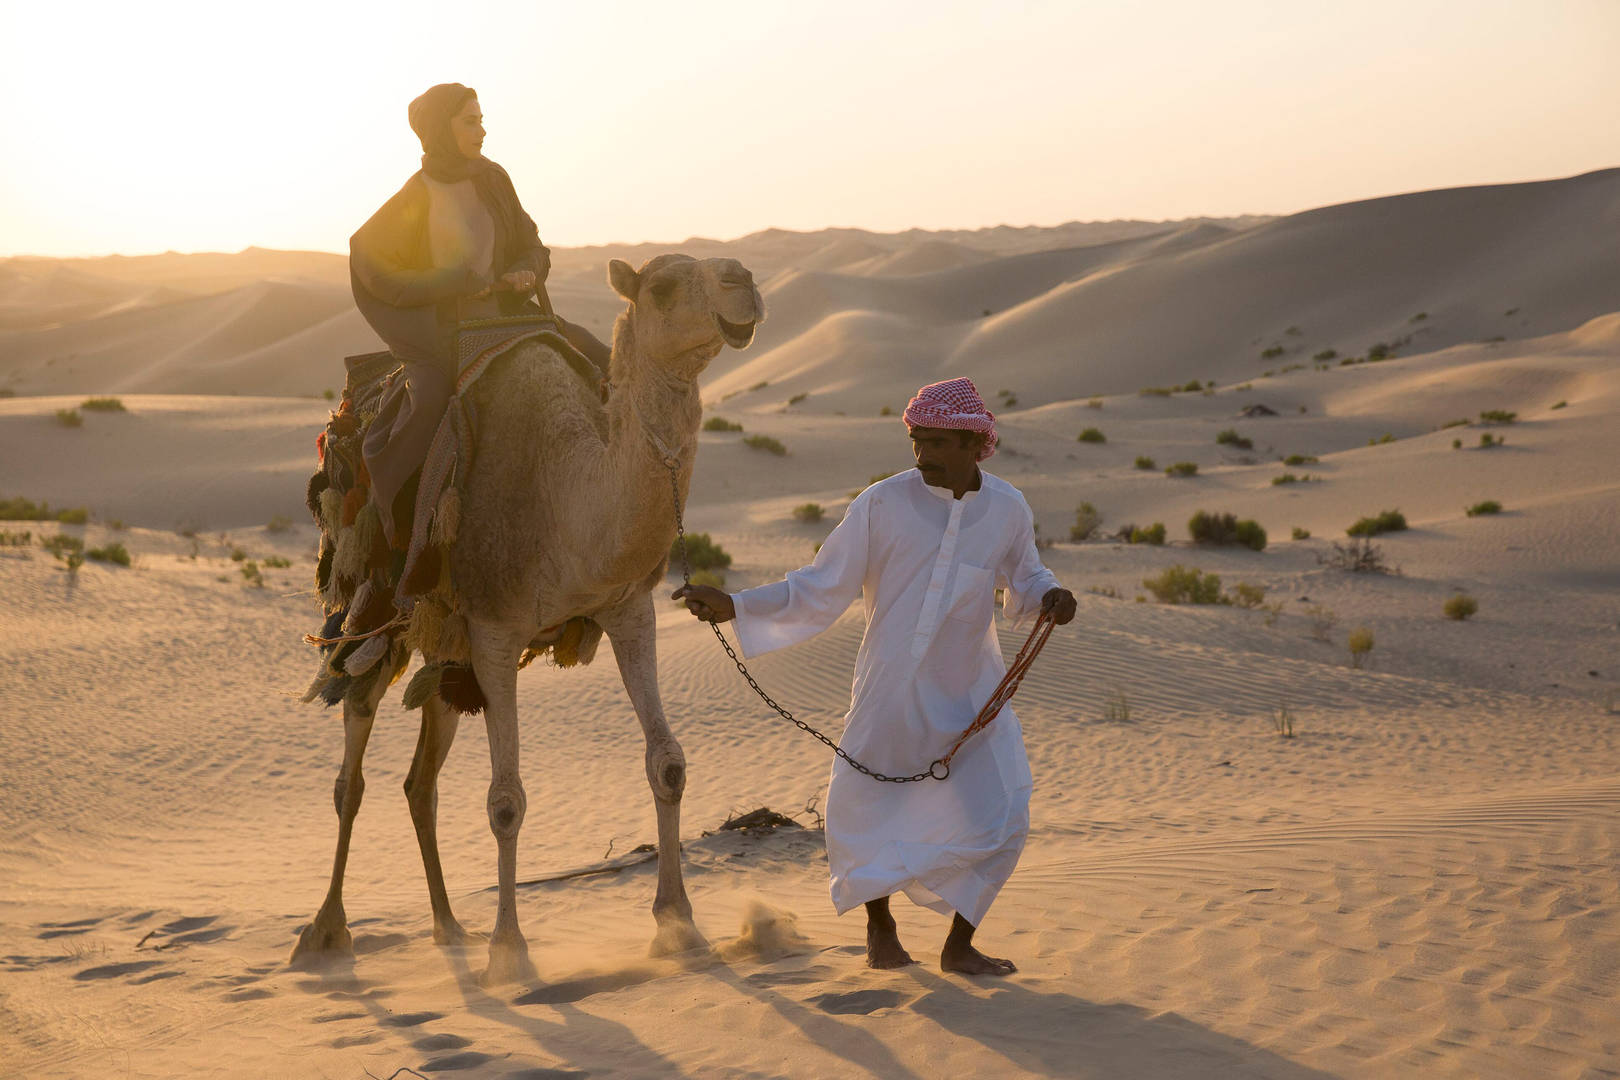 Frau auf einem Kamel